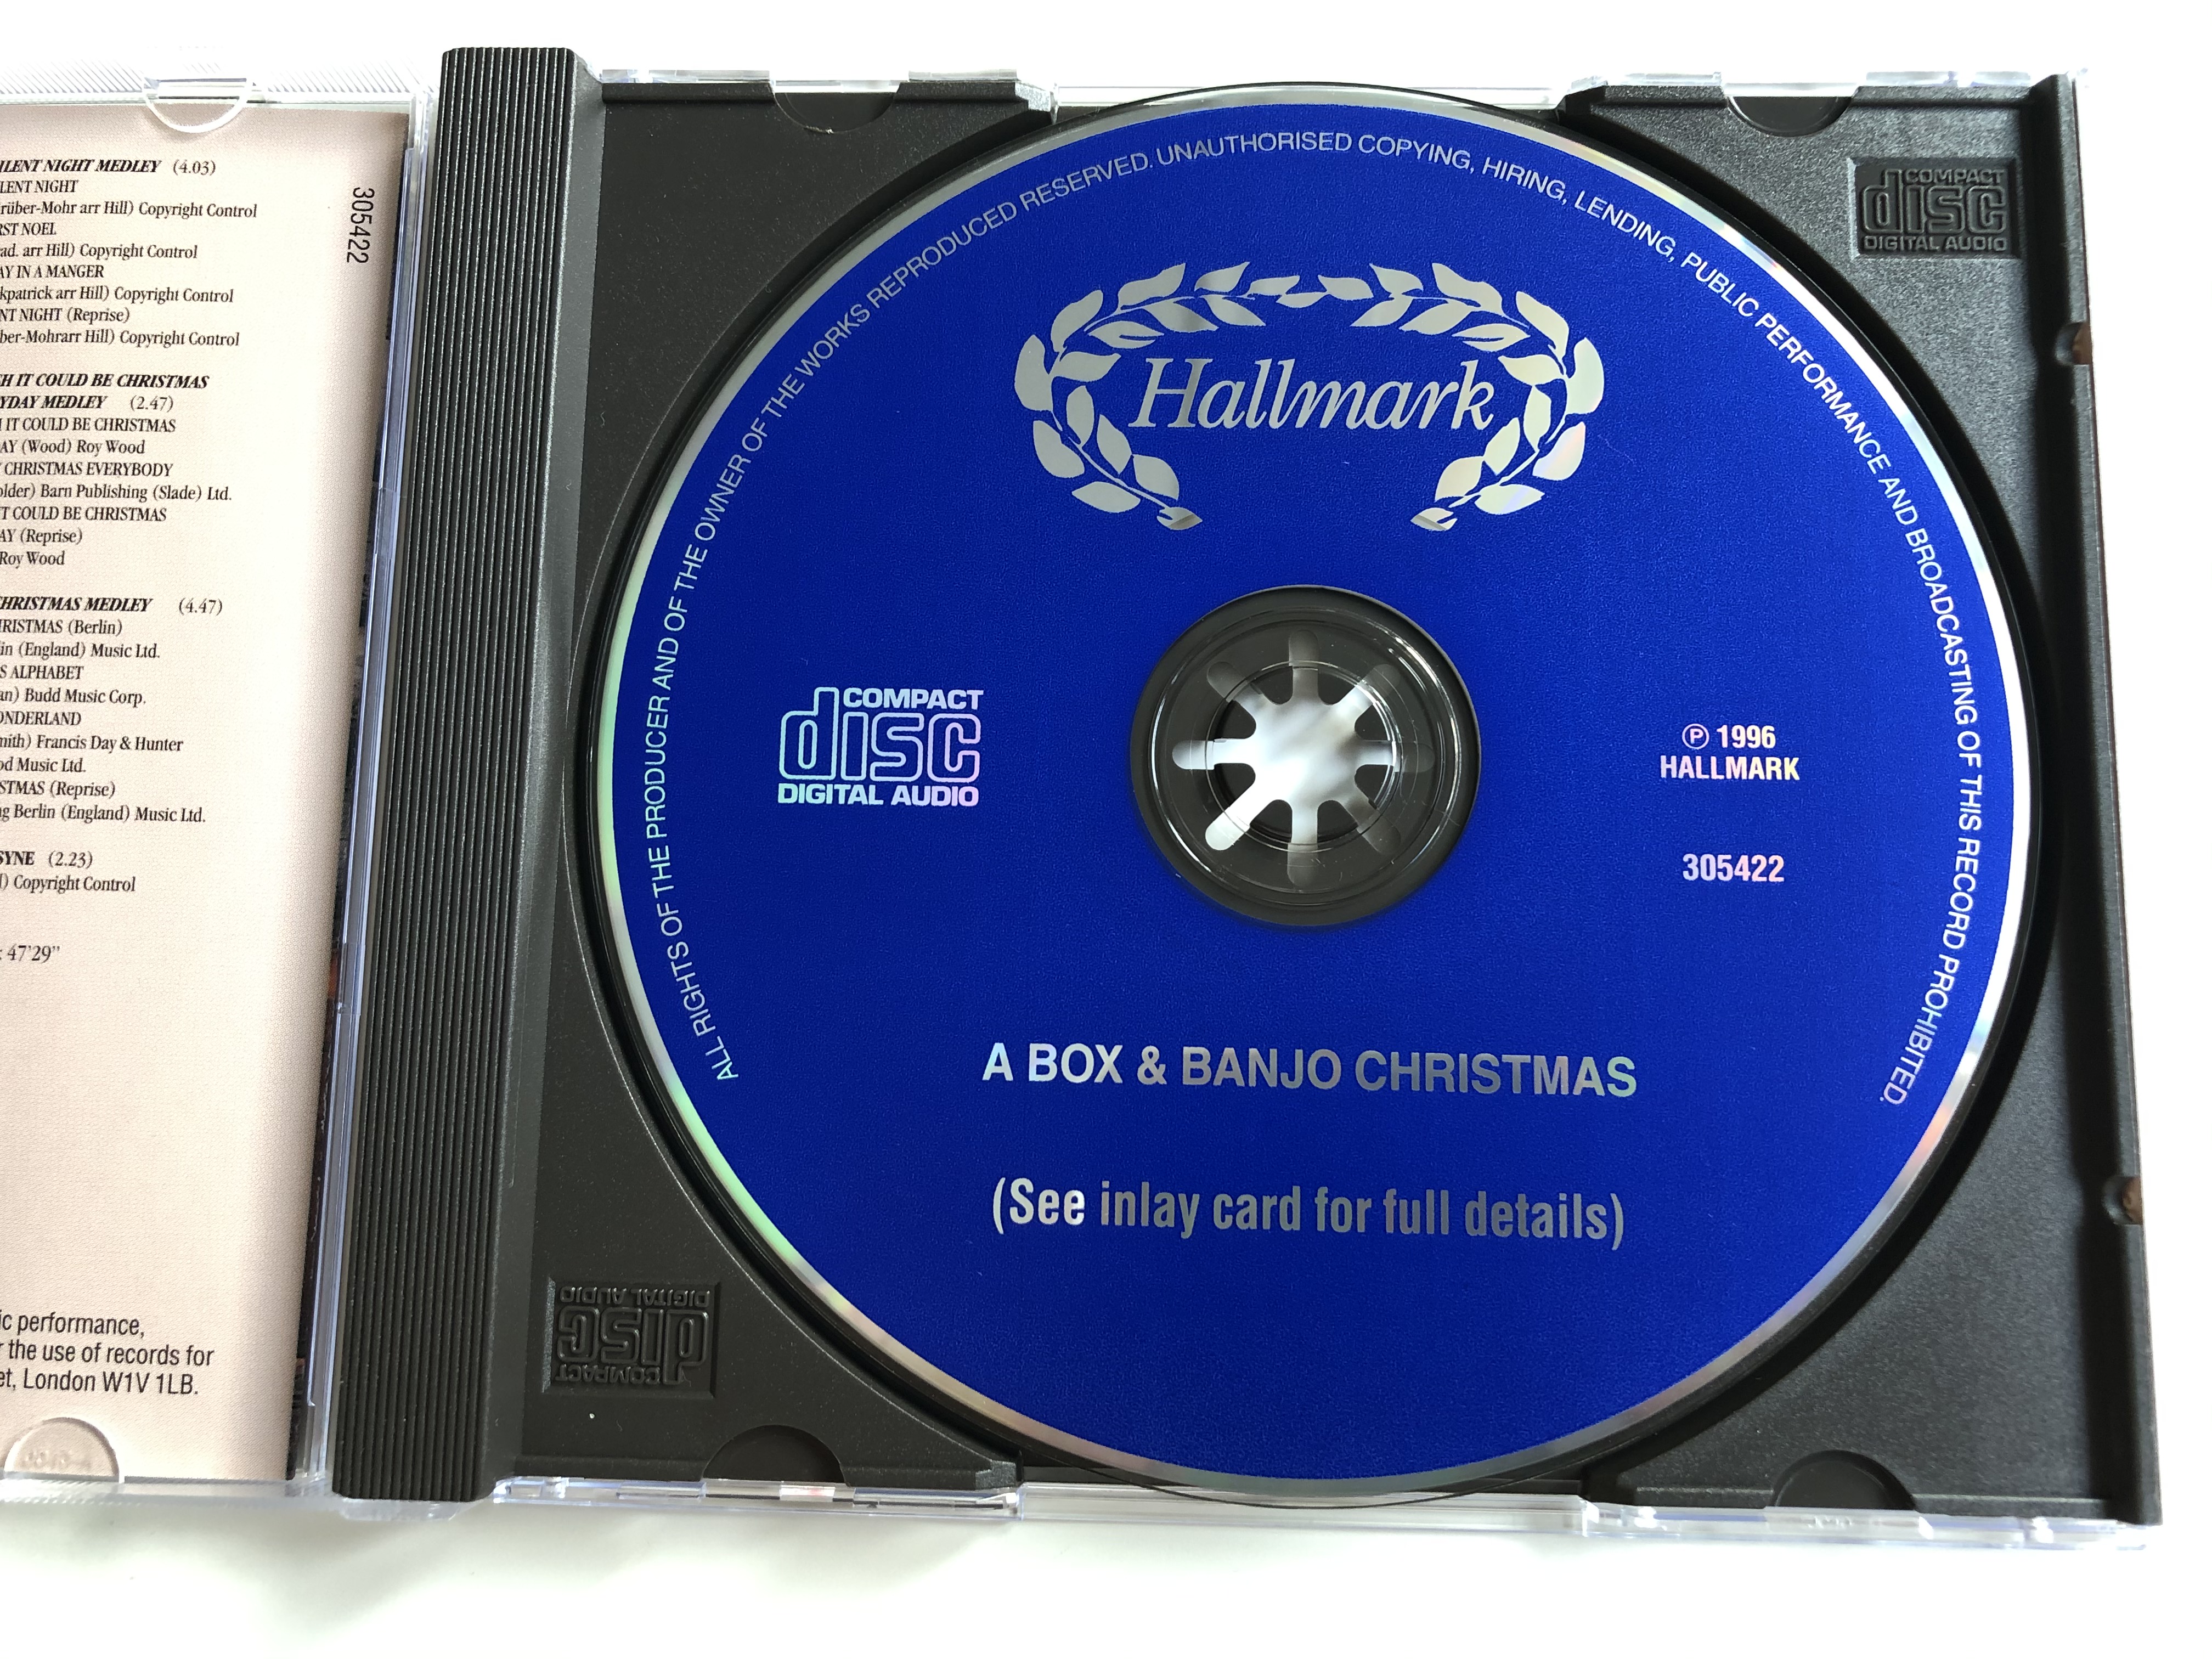 a-box-banjo-christmas-yuletide-favourites-played-on-the-concertina-banjo-hallmark-audio-cd-1996-305422-3-.jpg